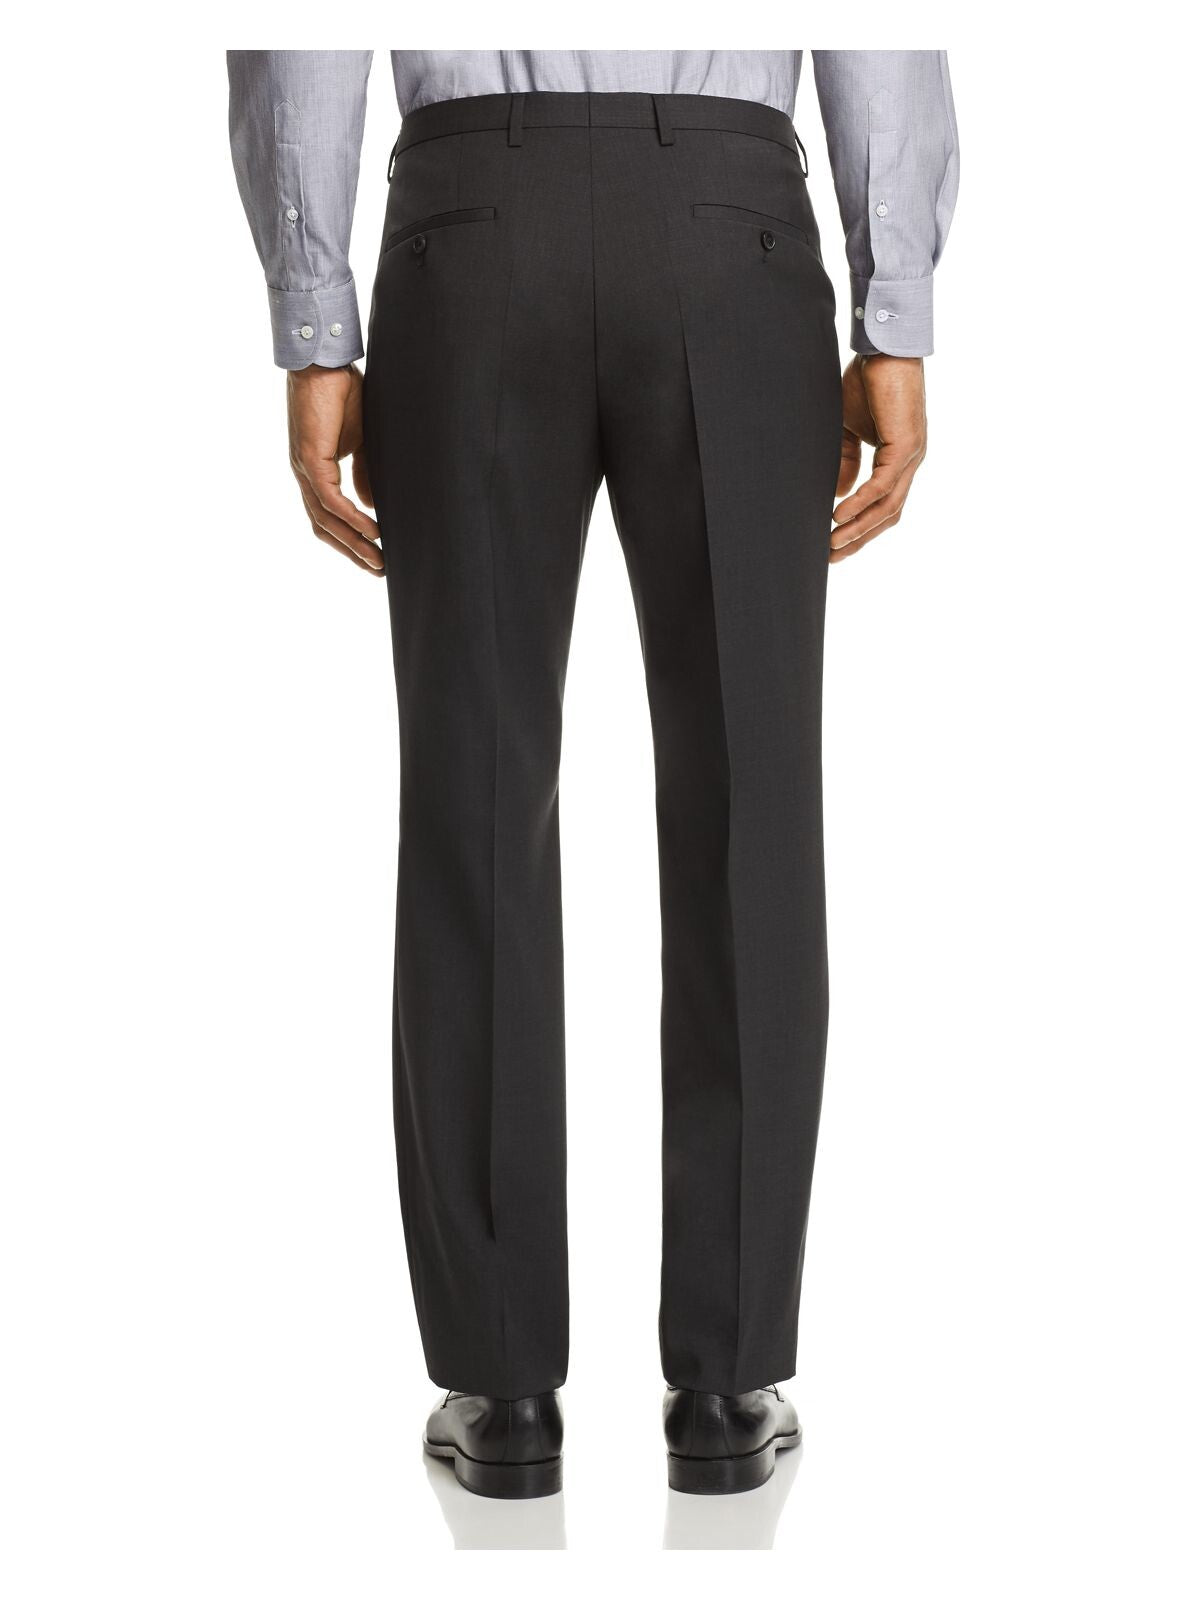 HUGO Mens Gray Gray Classic Fit Suit Separate Pants 36R